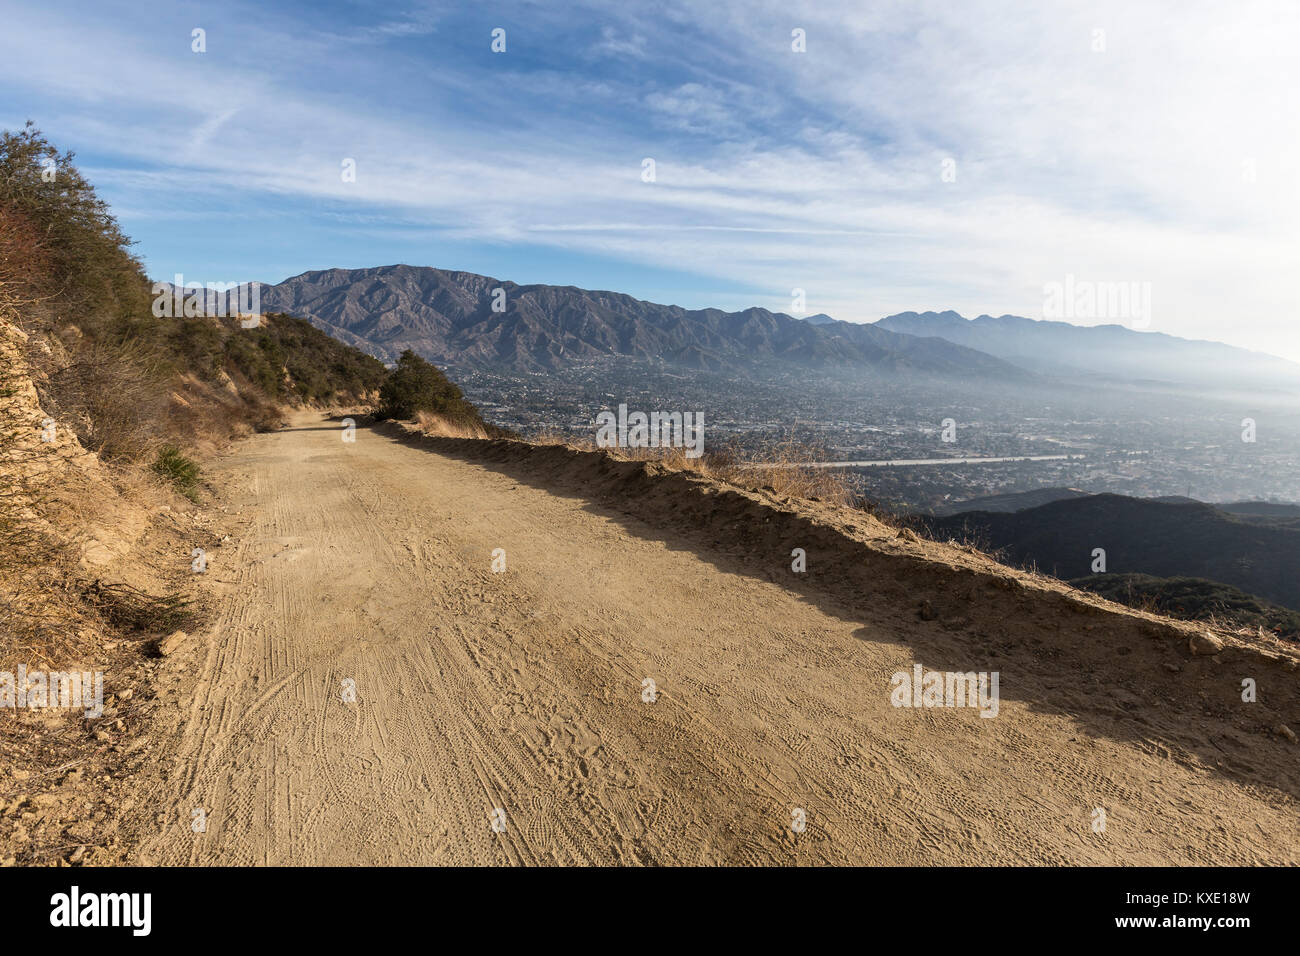 Dirt fire road on Verdugo Mountain above La Cresenta and La Canada - Flintridge in Los Angeles County, California. Stock Photo